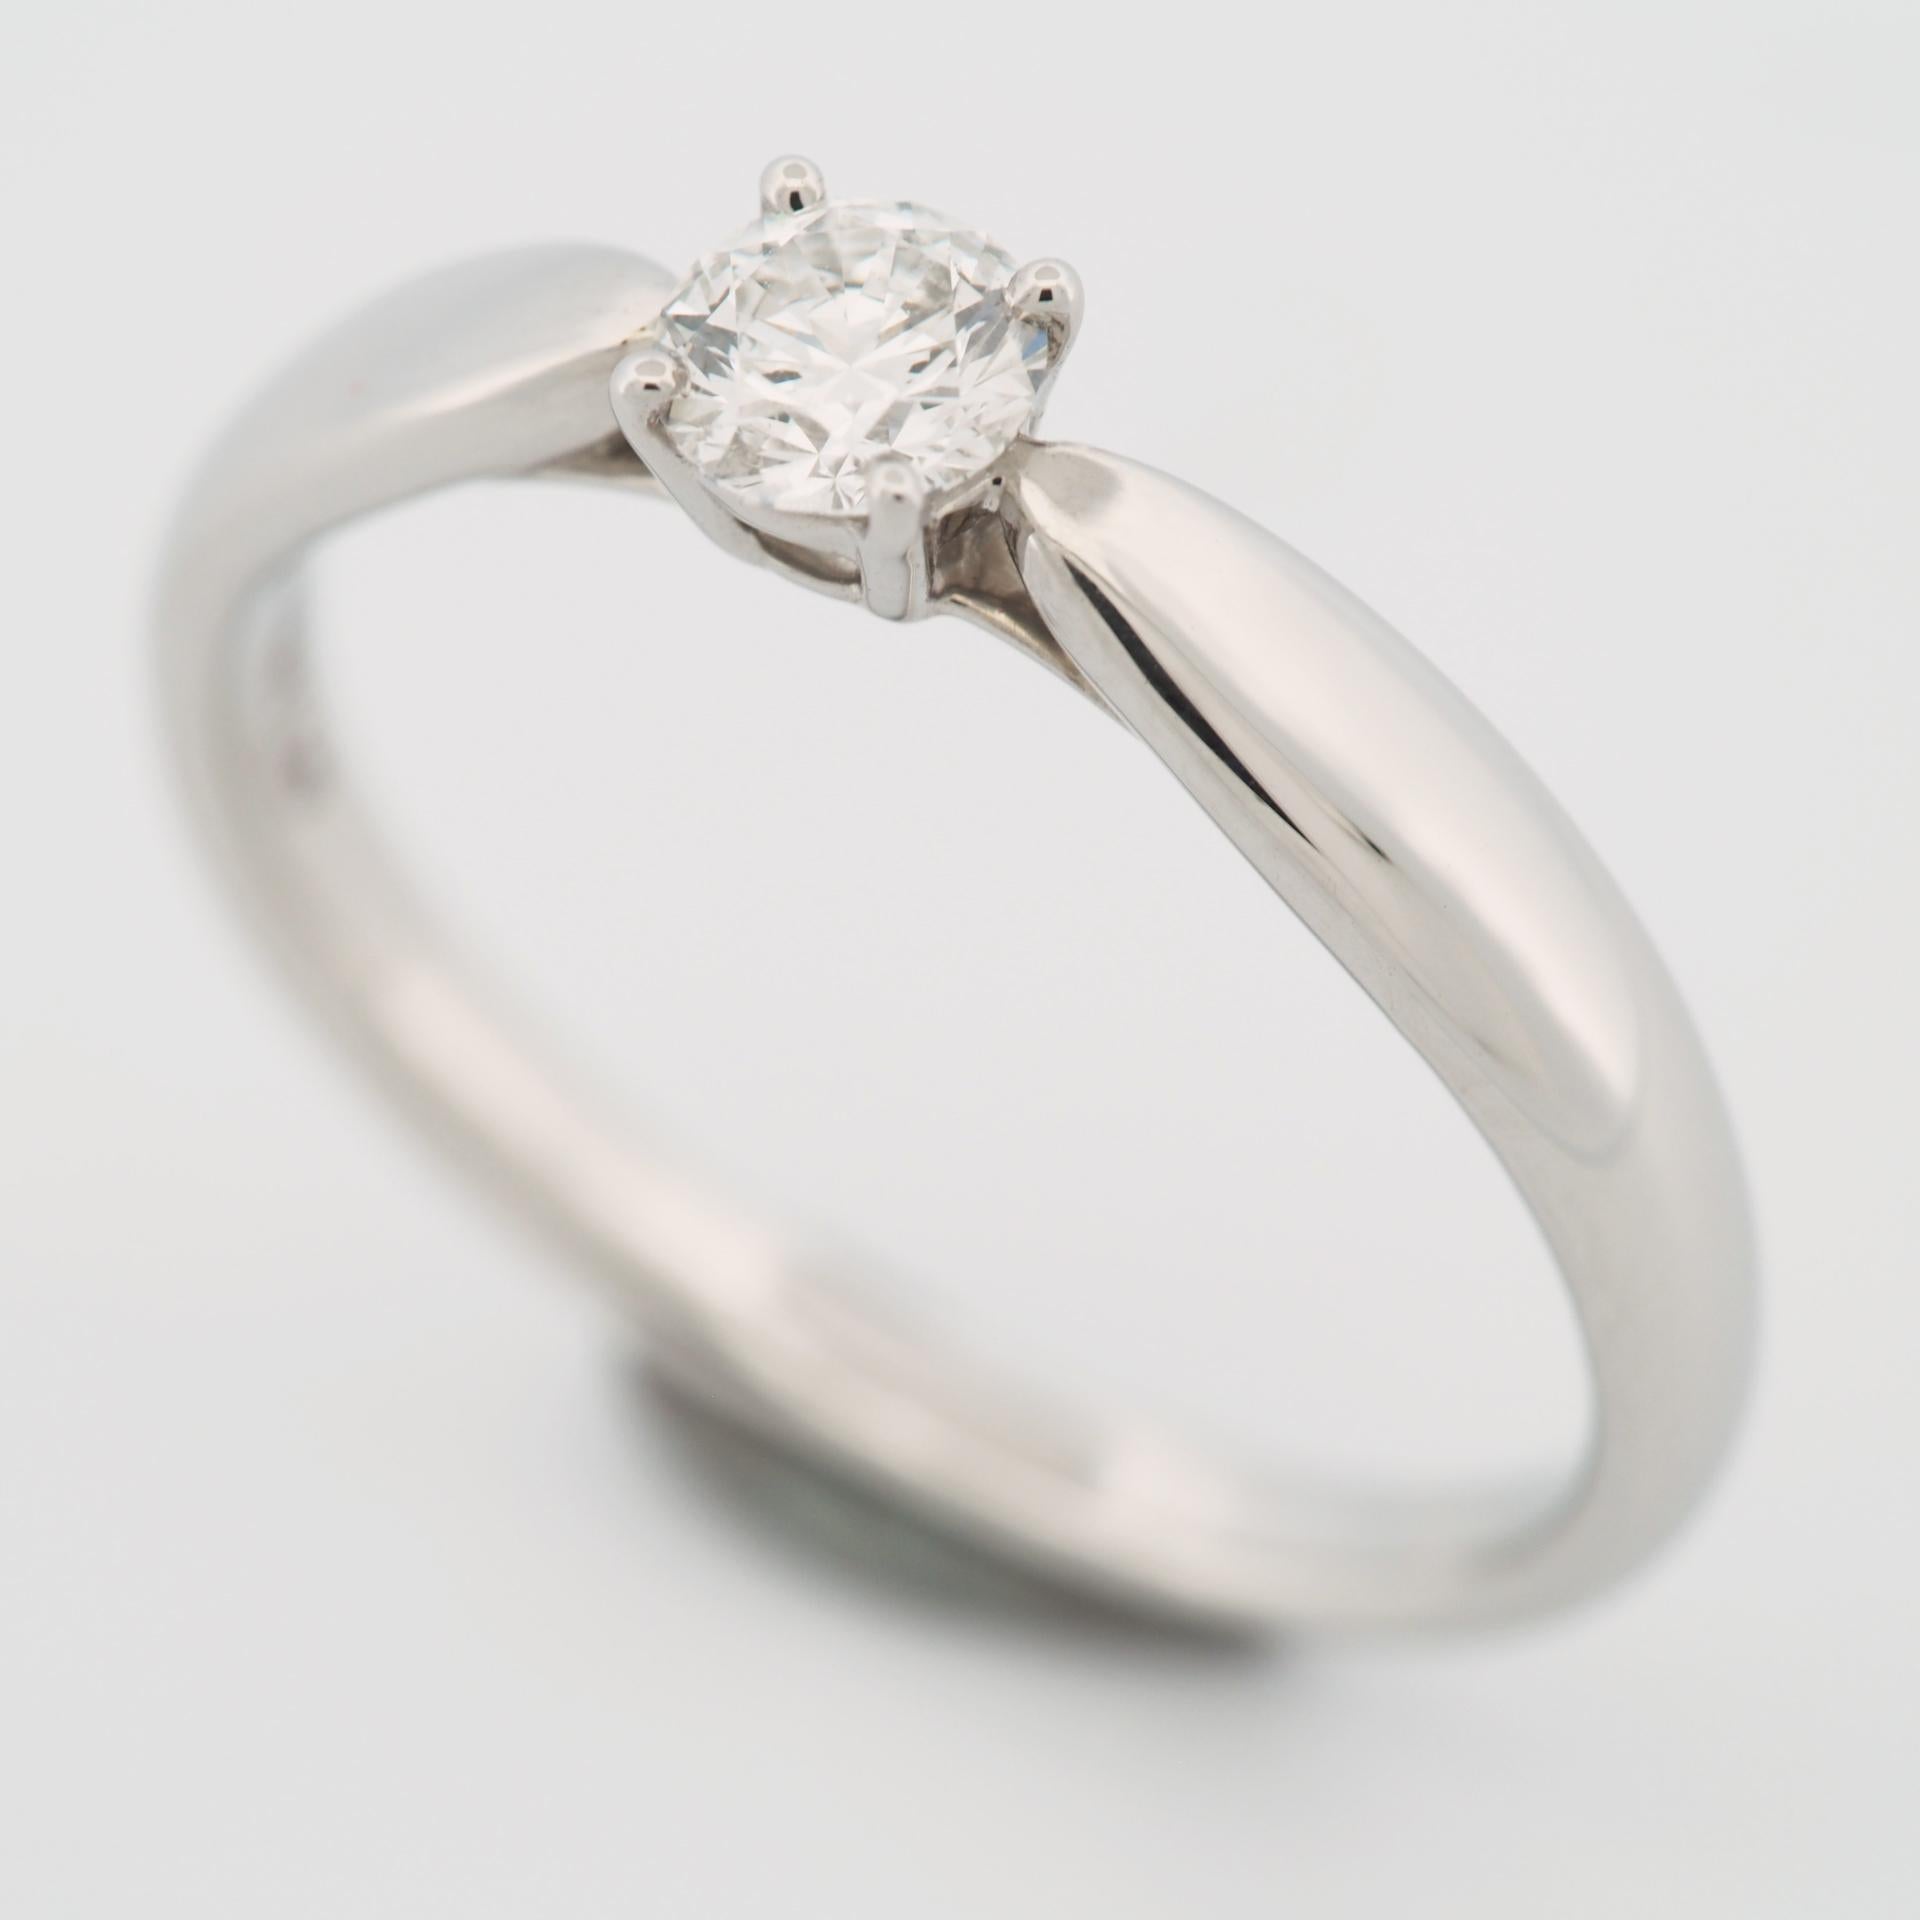 Item: Tiffany Harmony Solitaire Diamond Ring 
Stones: Diamond / 0.24ct
Color: G
Clarity: VS1
Polish: Excellent
Symmetry: Excellent
Fluorescence: Medium Blue
Metal: Platinum 950
Ring Size: US SIZE 5.75 UK SIZE K 3/4
Internal Diameter: 16.35